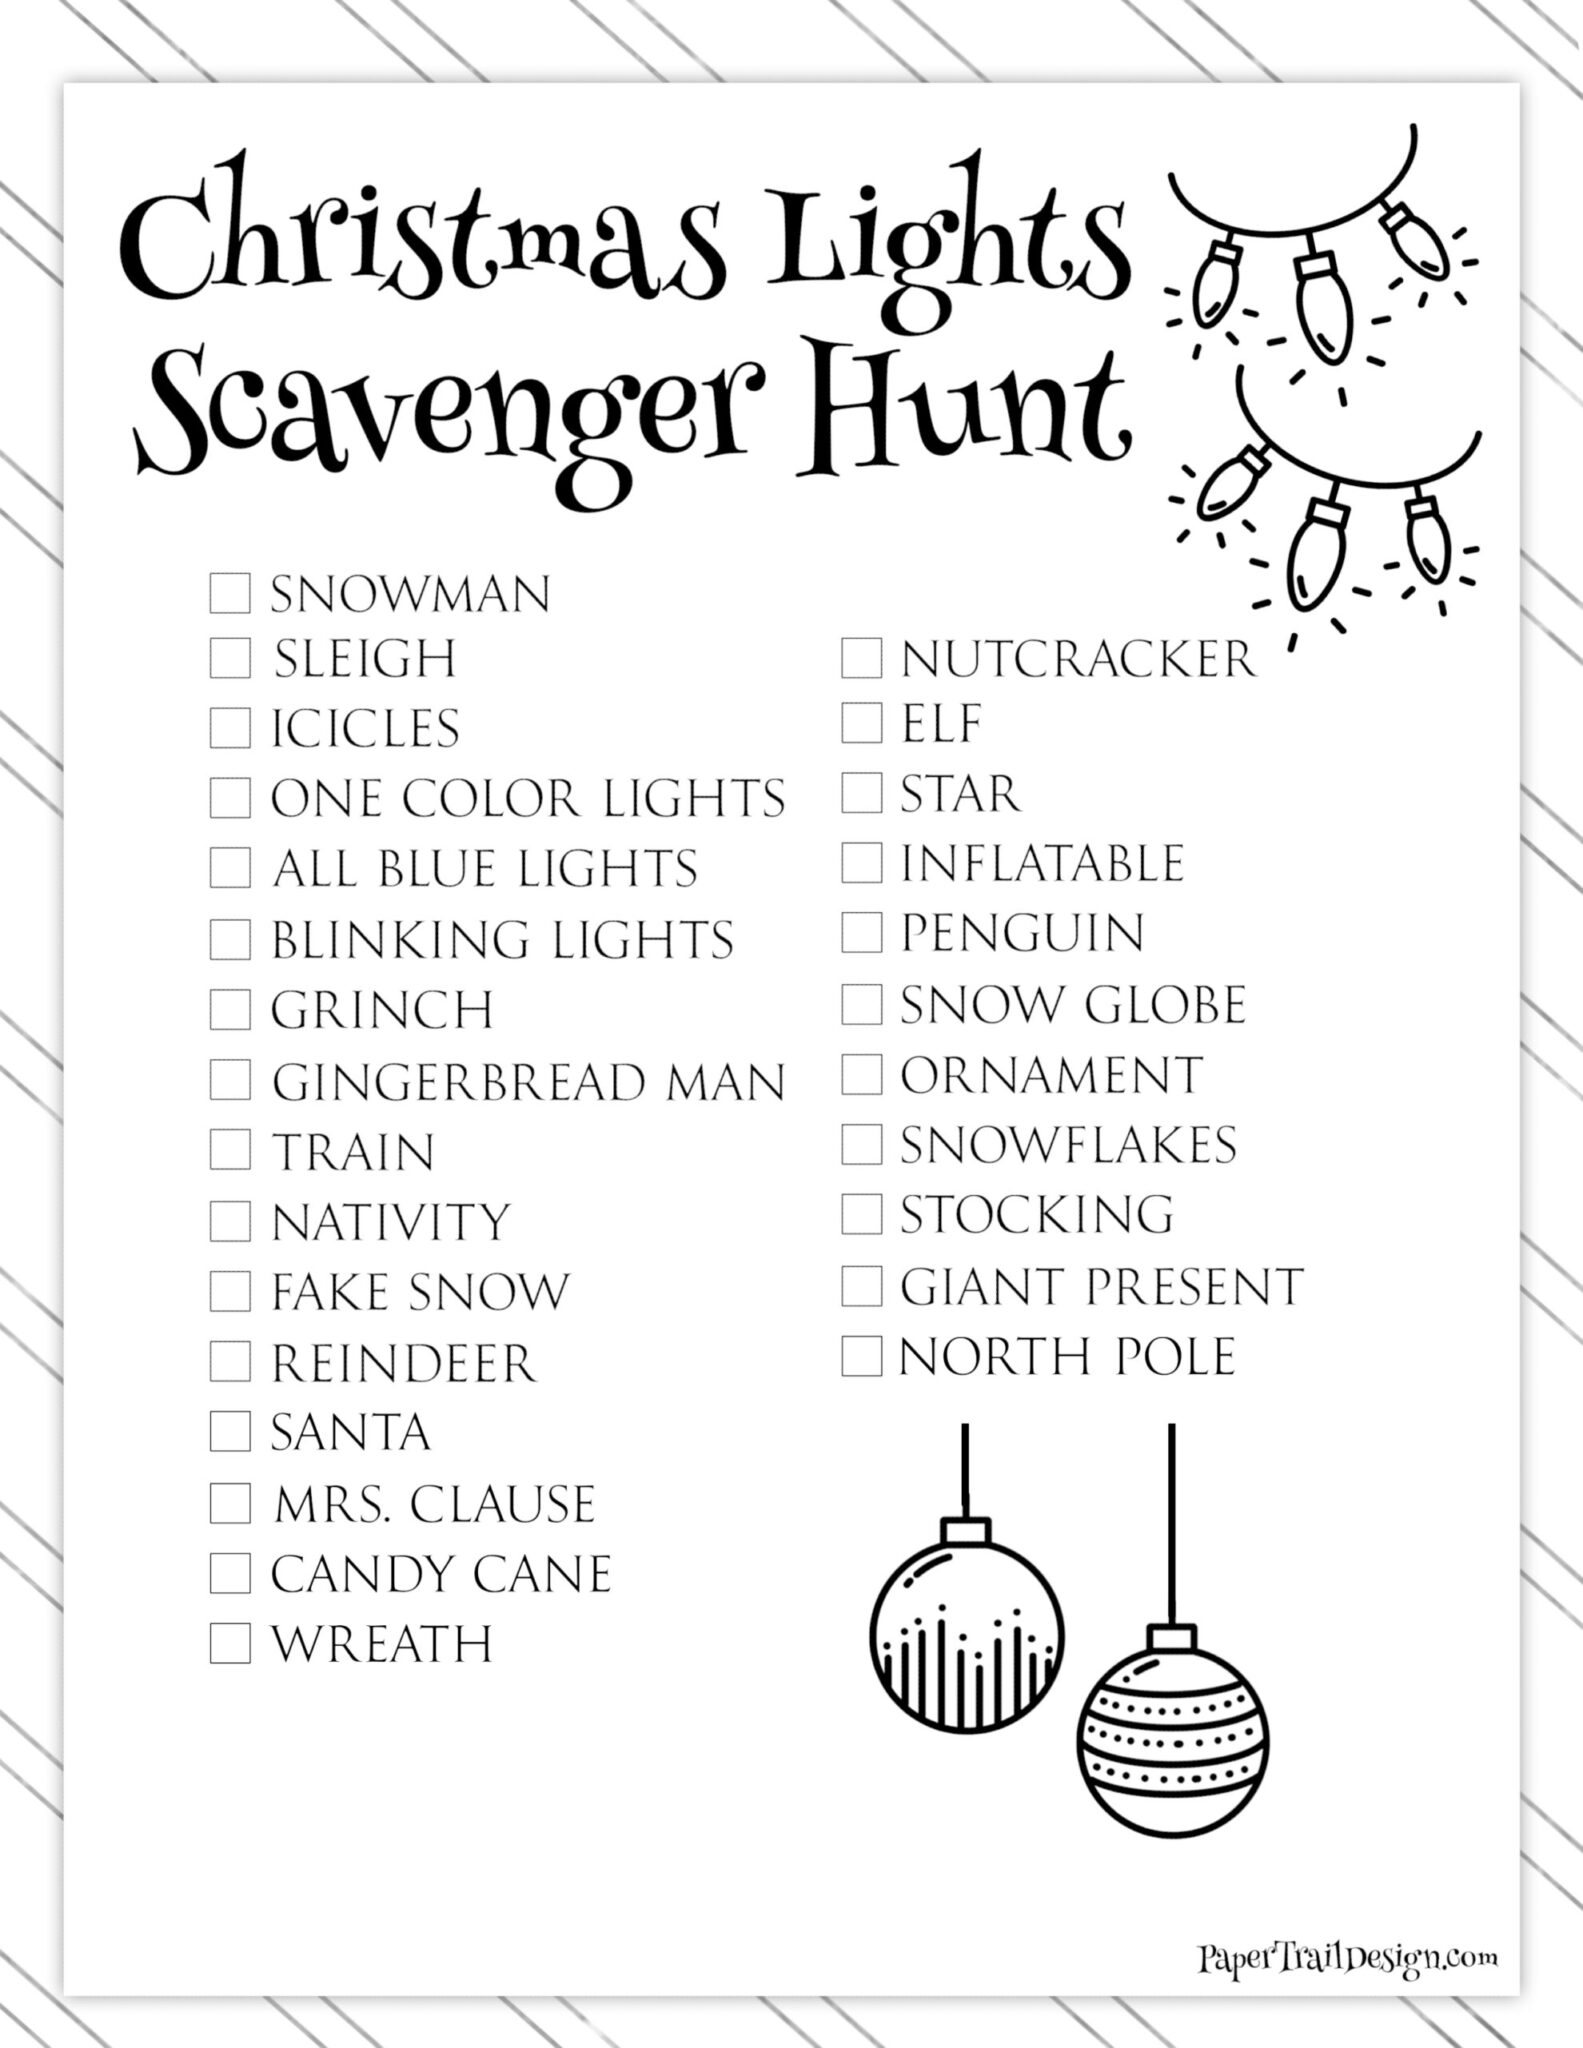 free-printable-christmas-light-scavenger-hunt